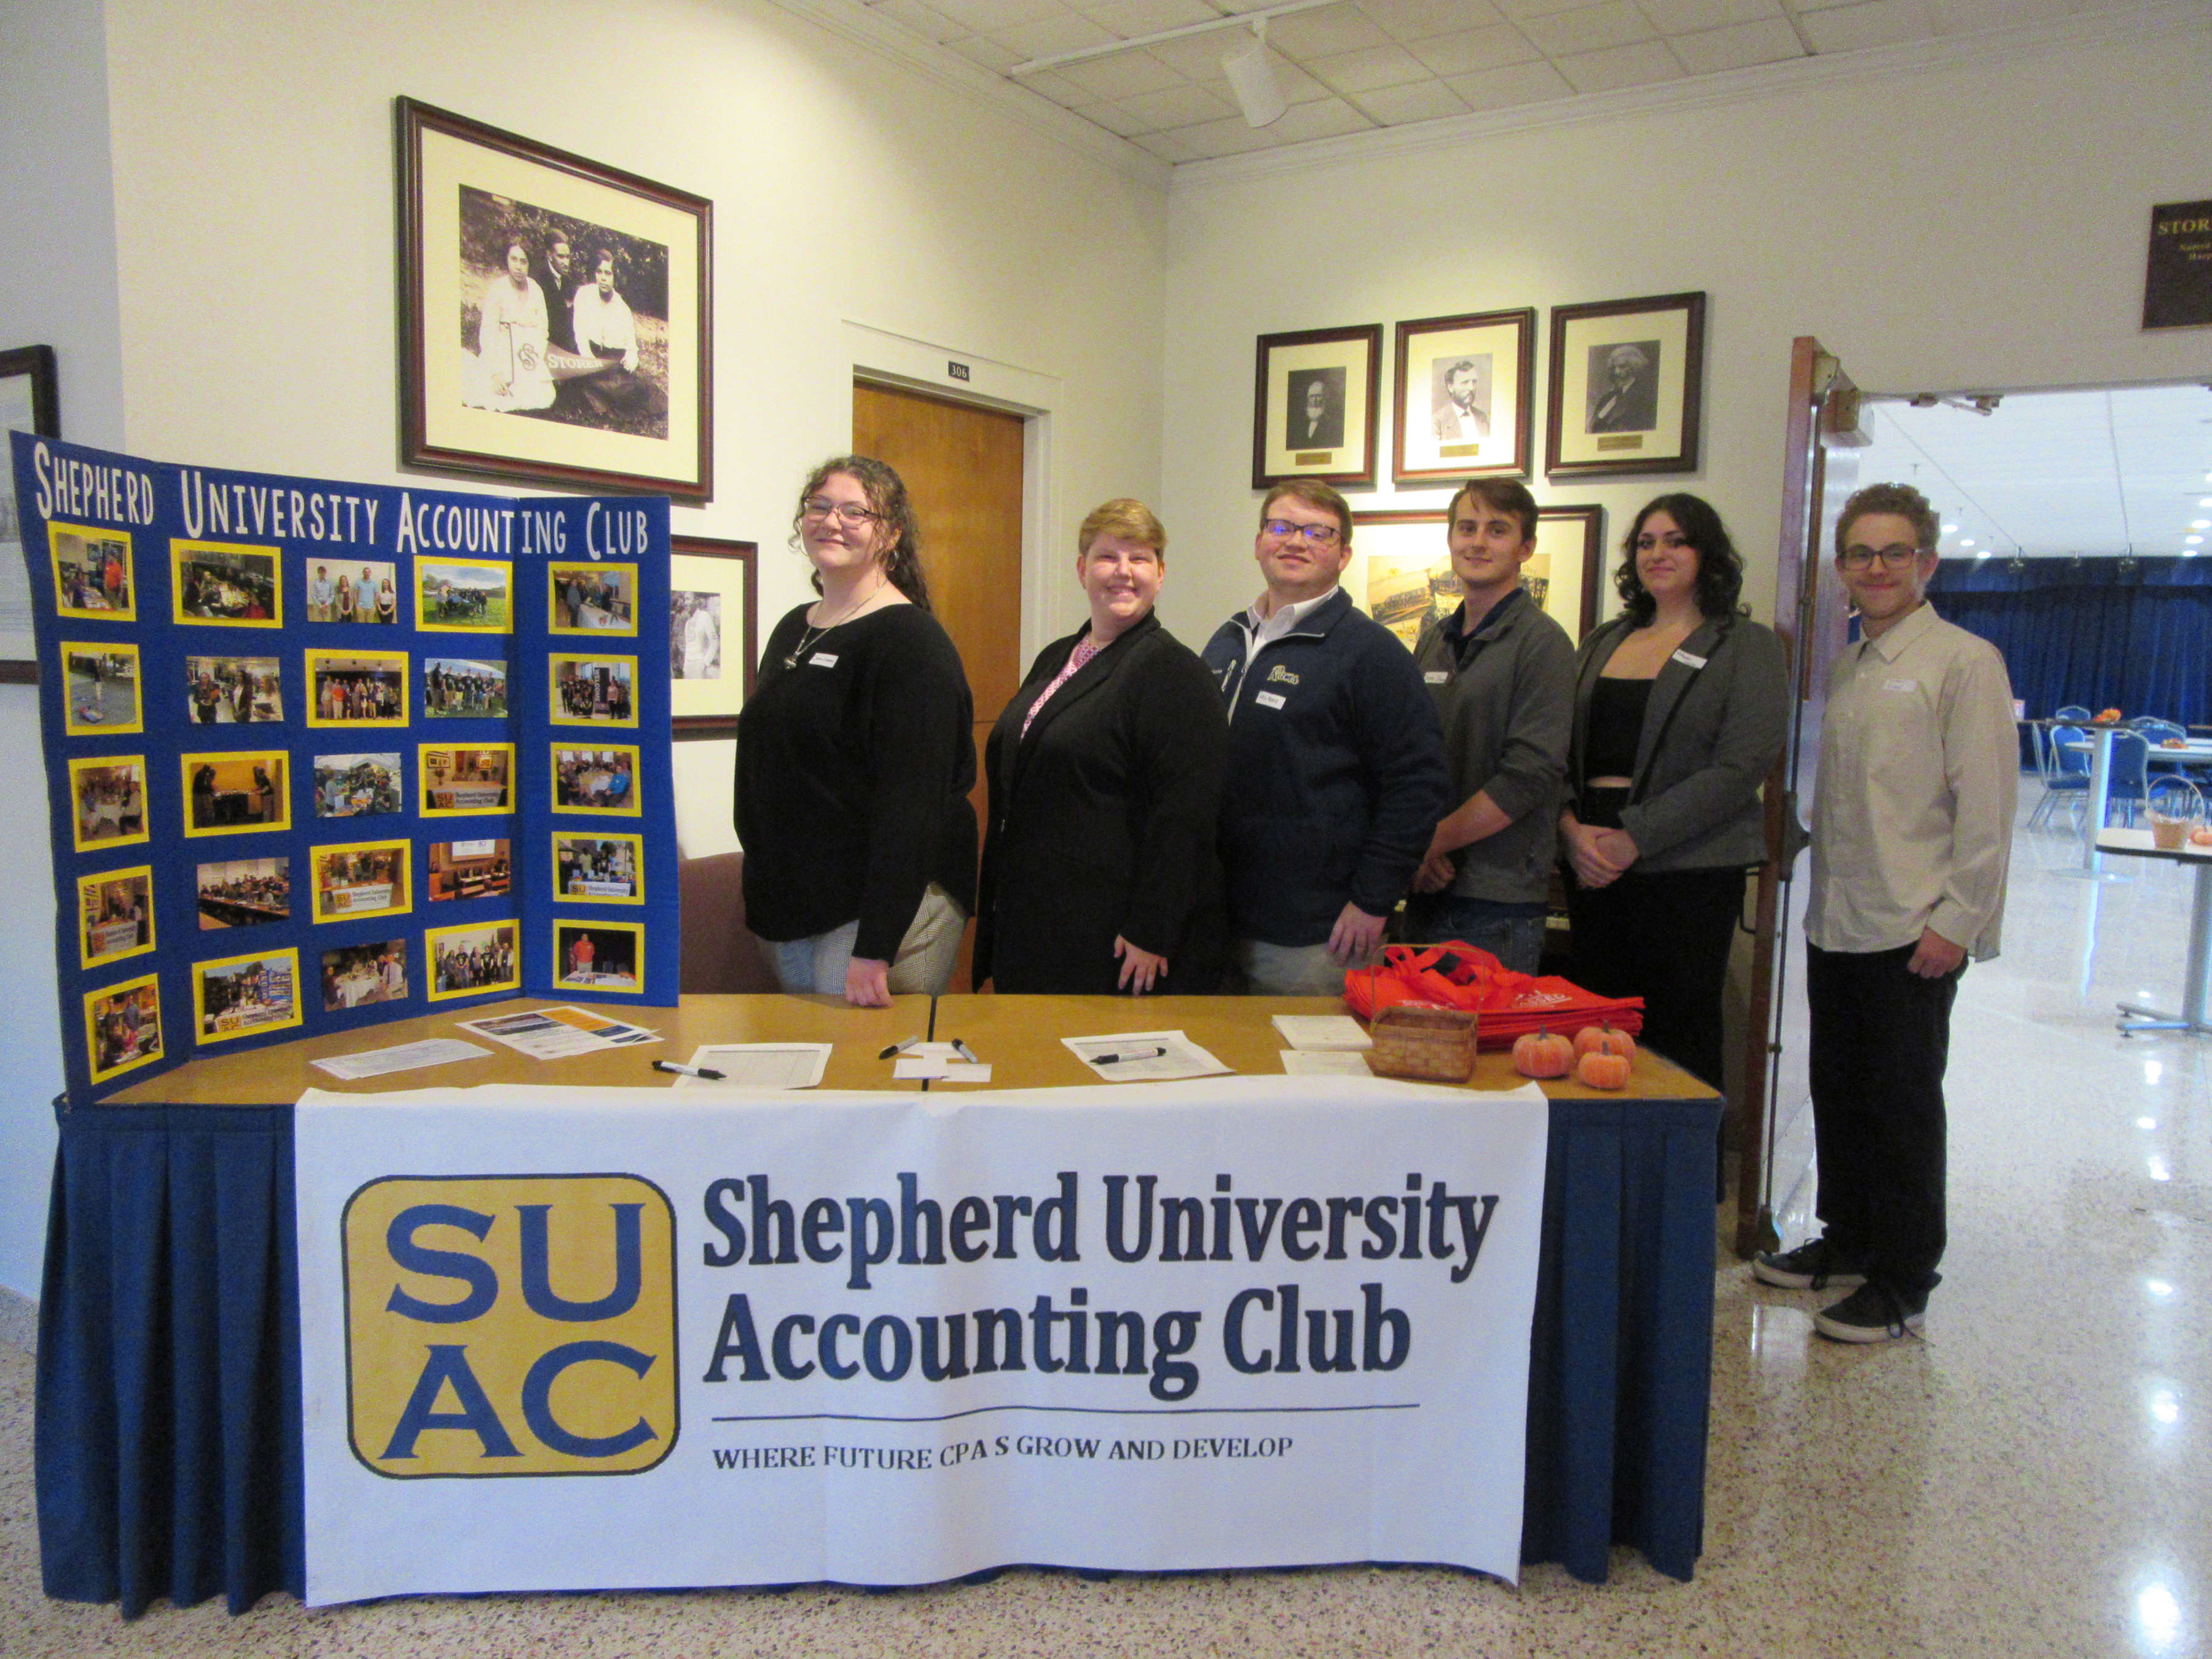 Group photo of Shepherd University Accounting Club.